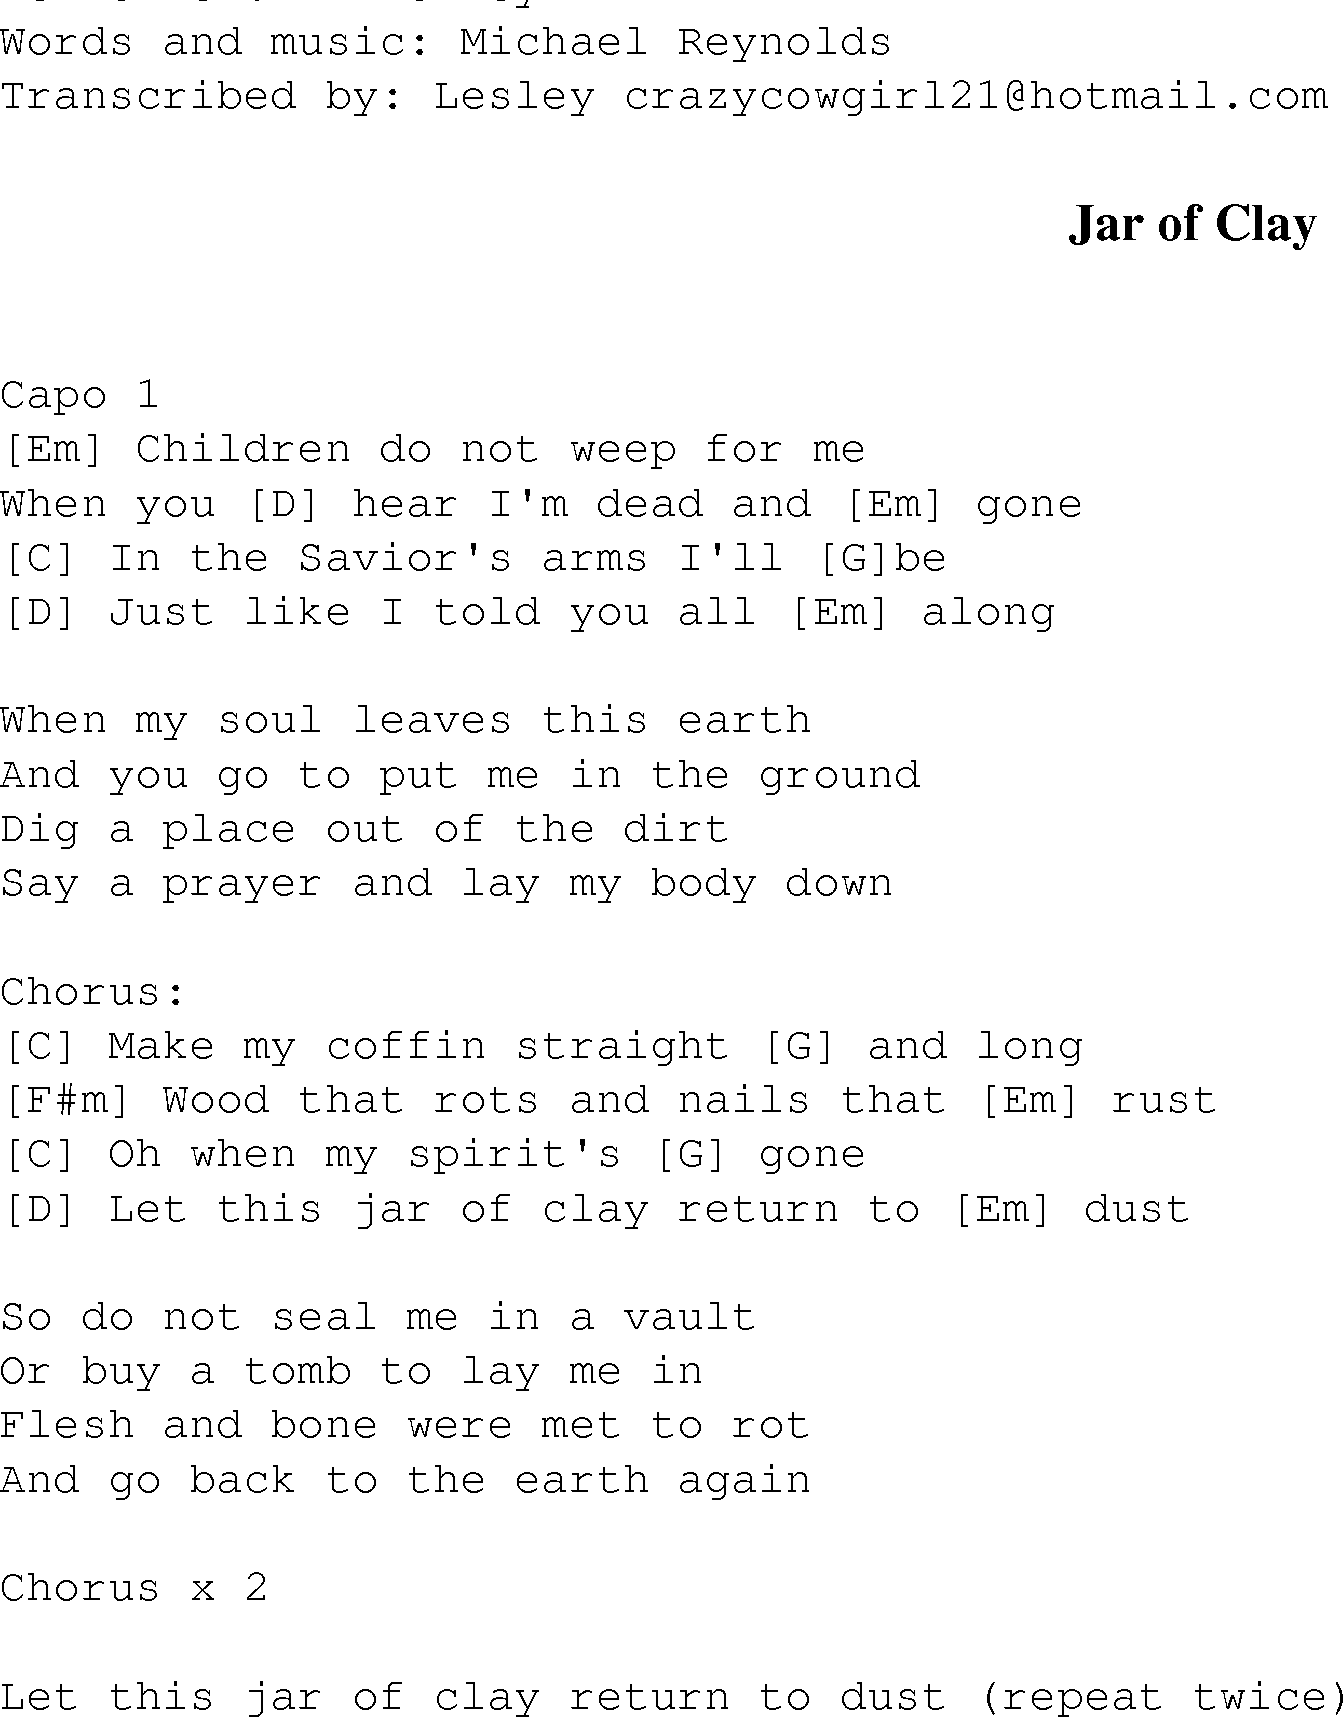 Gospel Song: jars_of_clay, lyrics and chords.